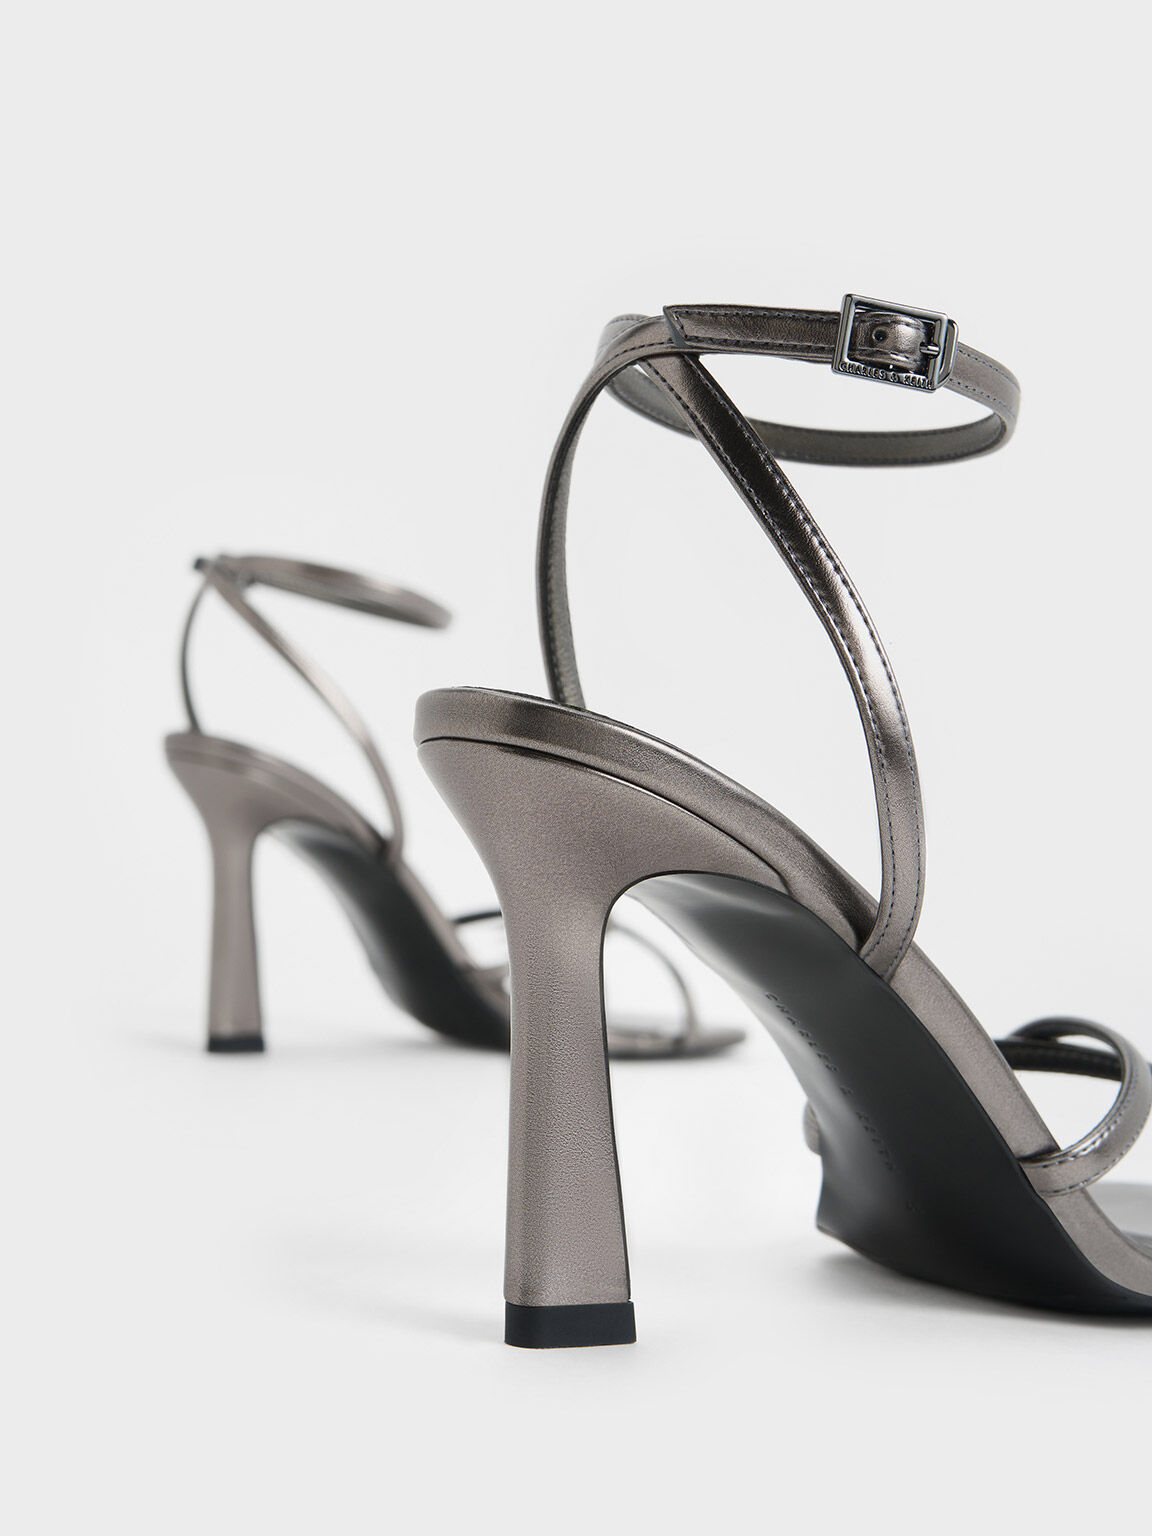 Guess Silver Glitter & Slate Gray Strappy Heels. | eBay